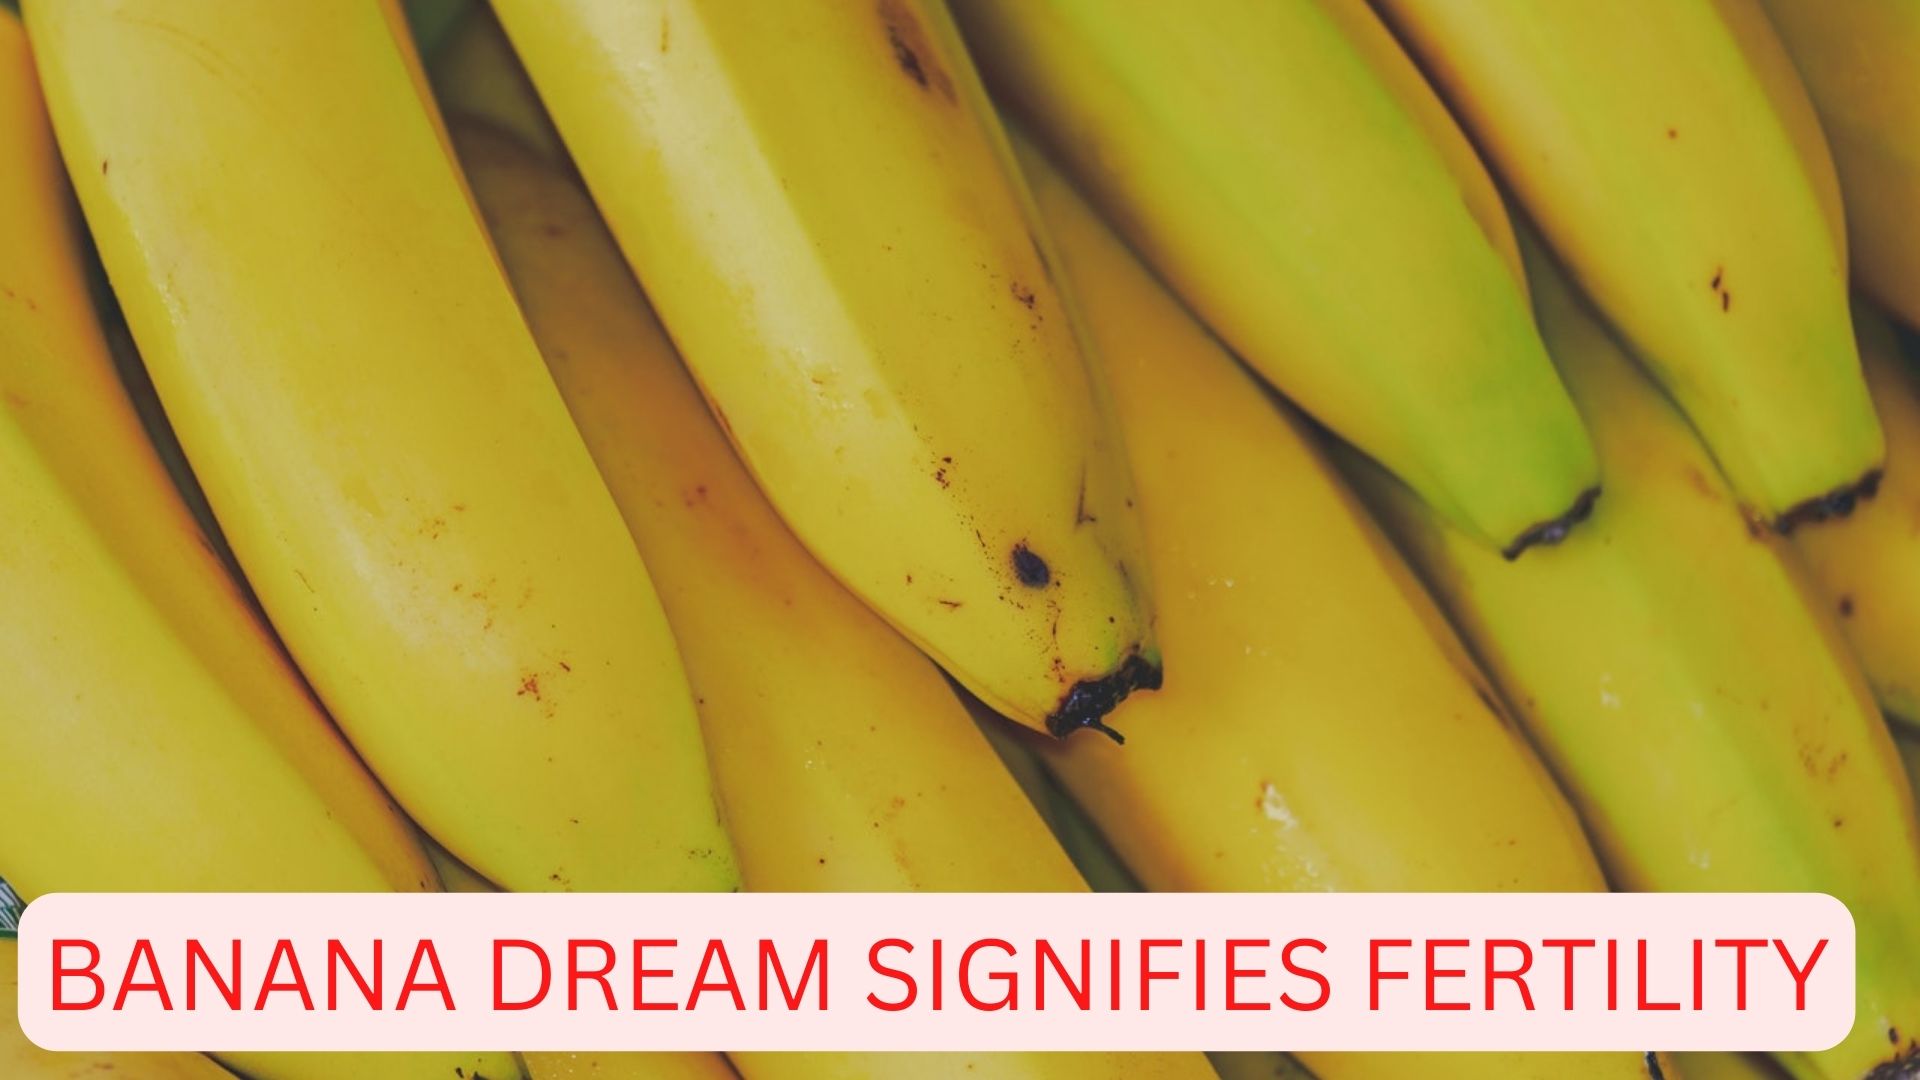 Banana Dream Signifies Fertility